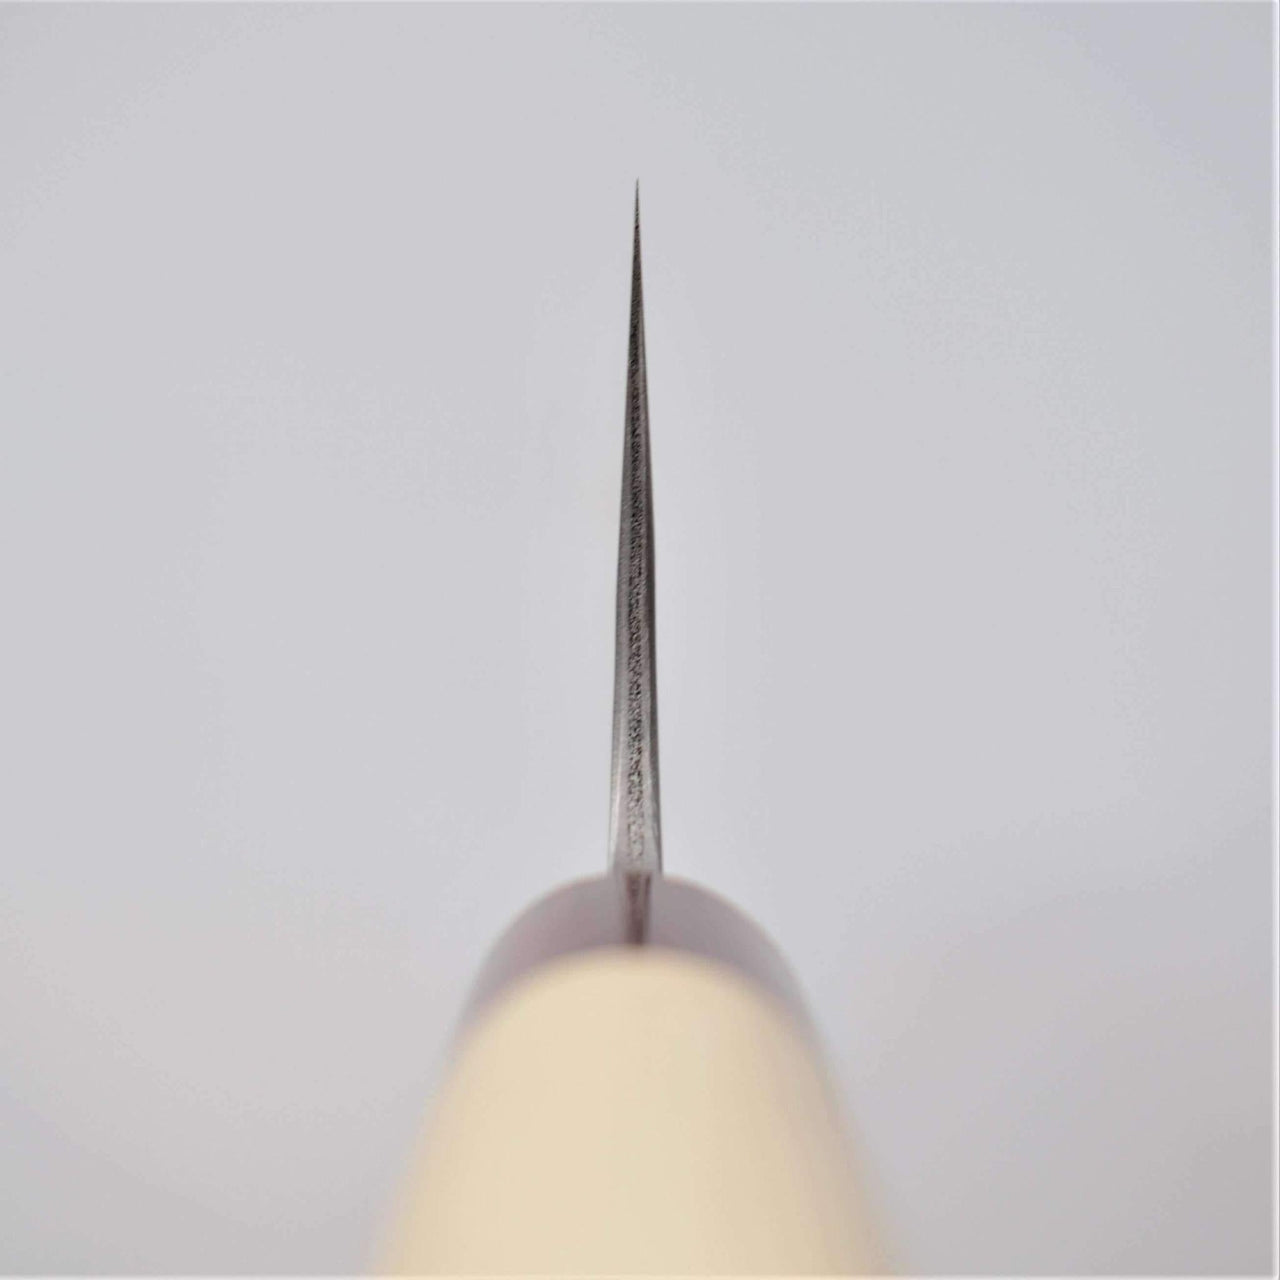 Masakage Yuki Gyuto 270mm-Knife-Masakage-Carbon Knife Co